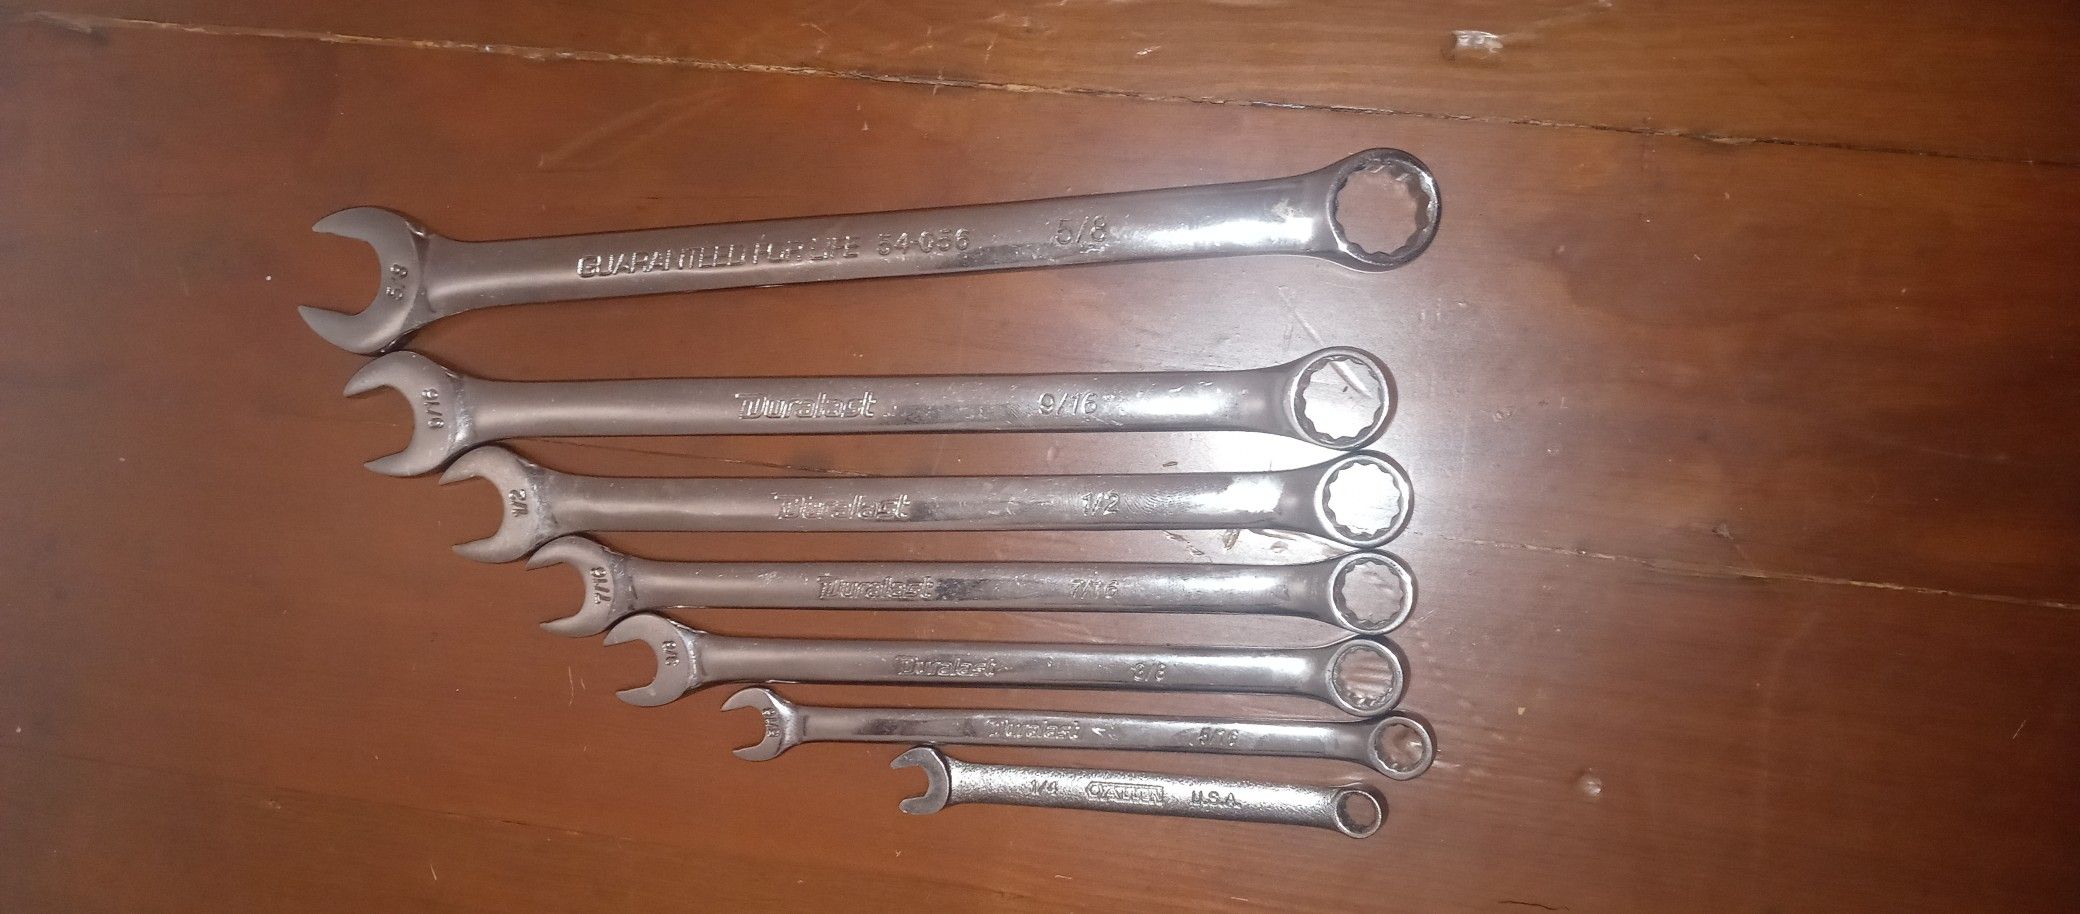 Duralast wrench set